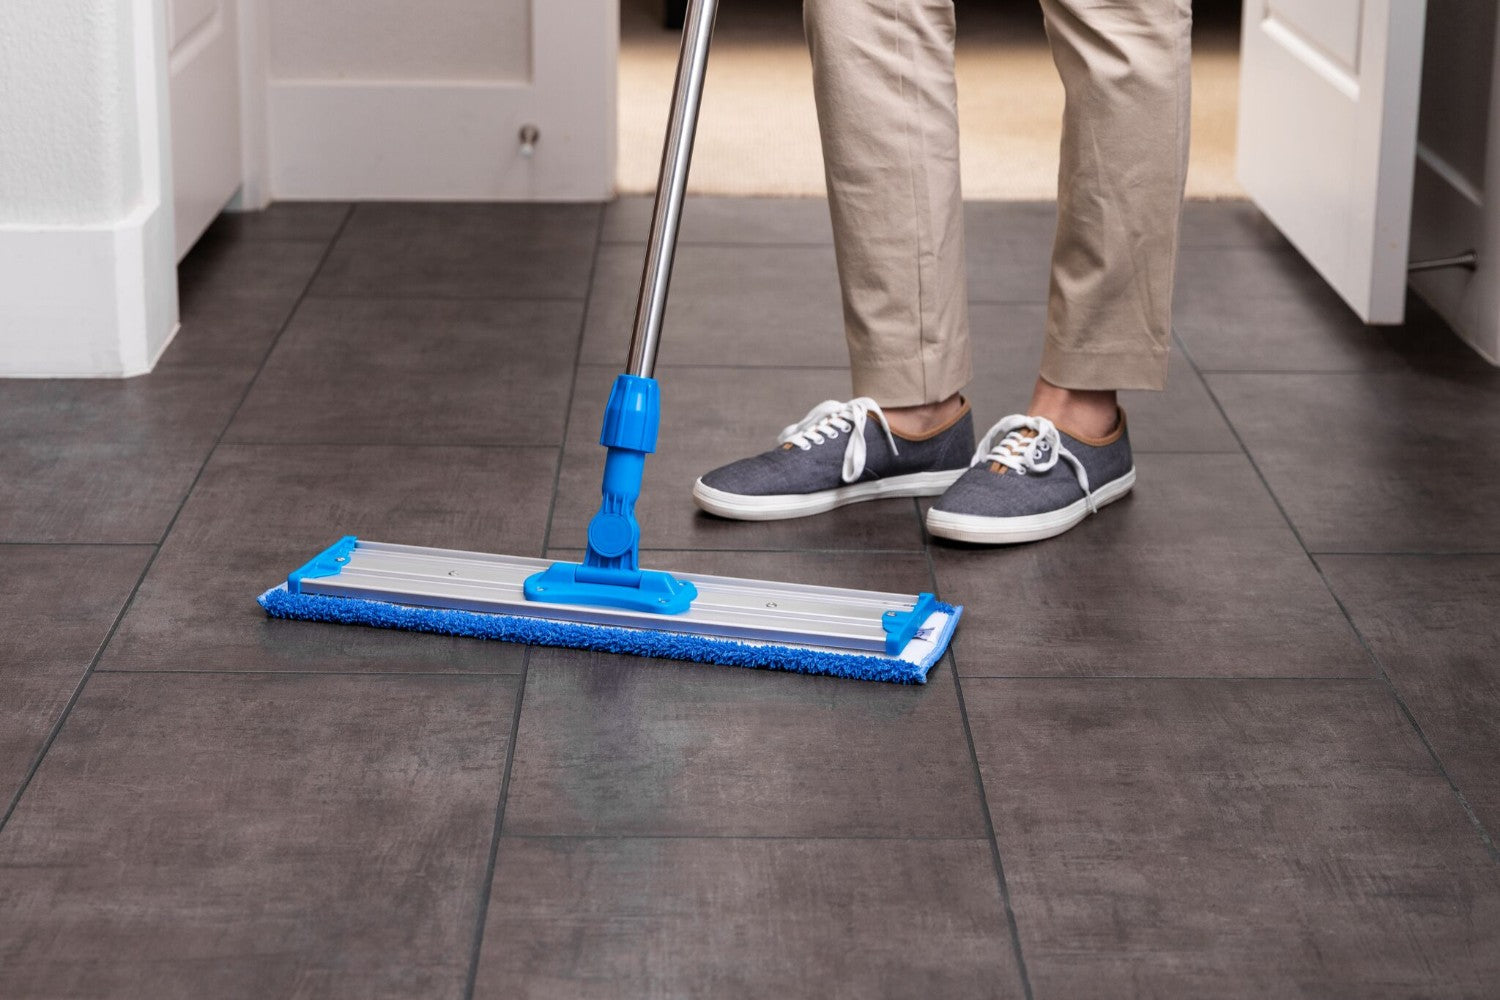 PMWM20-20 inch premium microfiber wet mop pads for tile floors